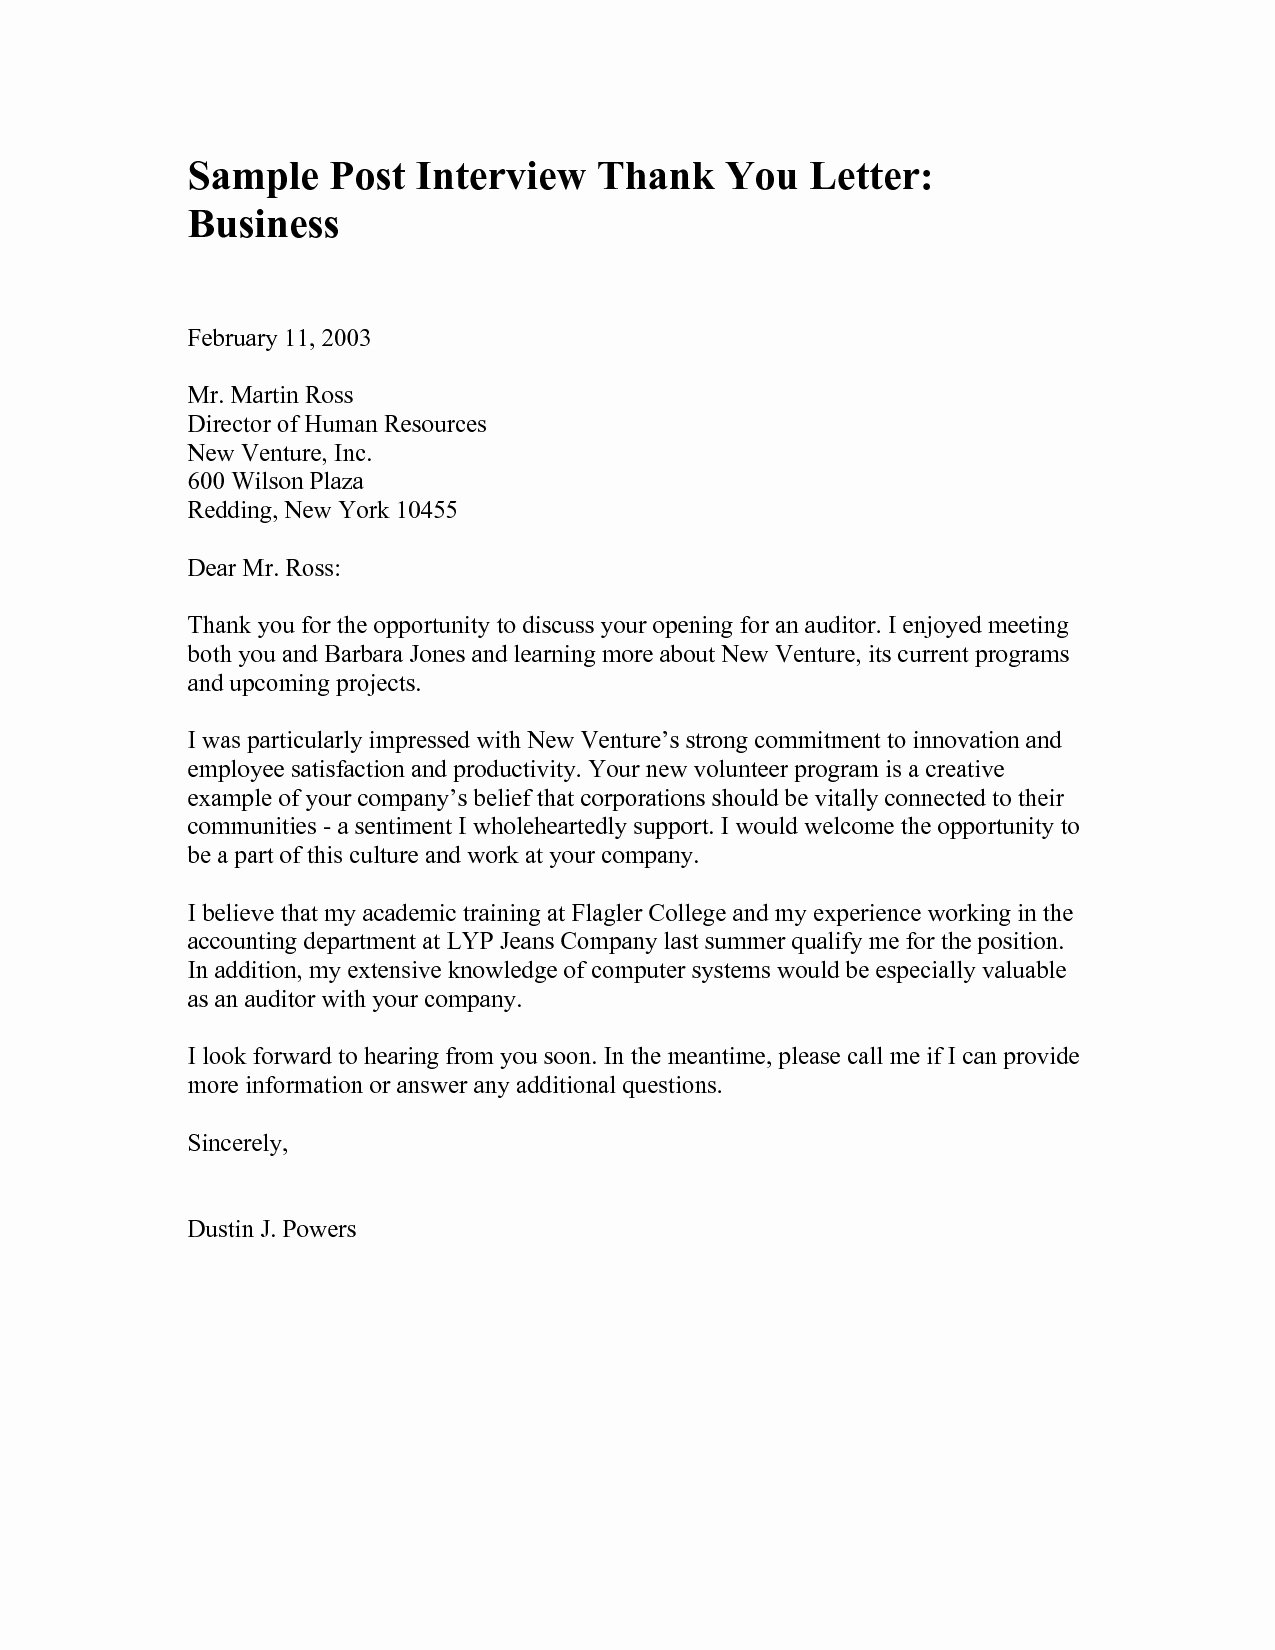 Business Appreciation Letter